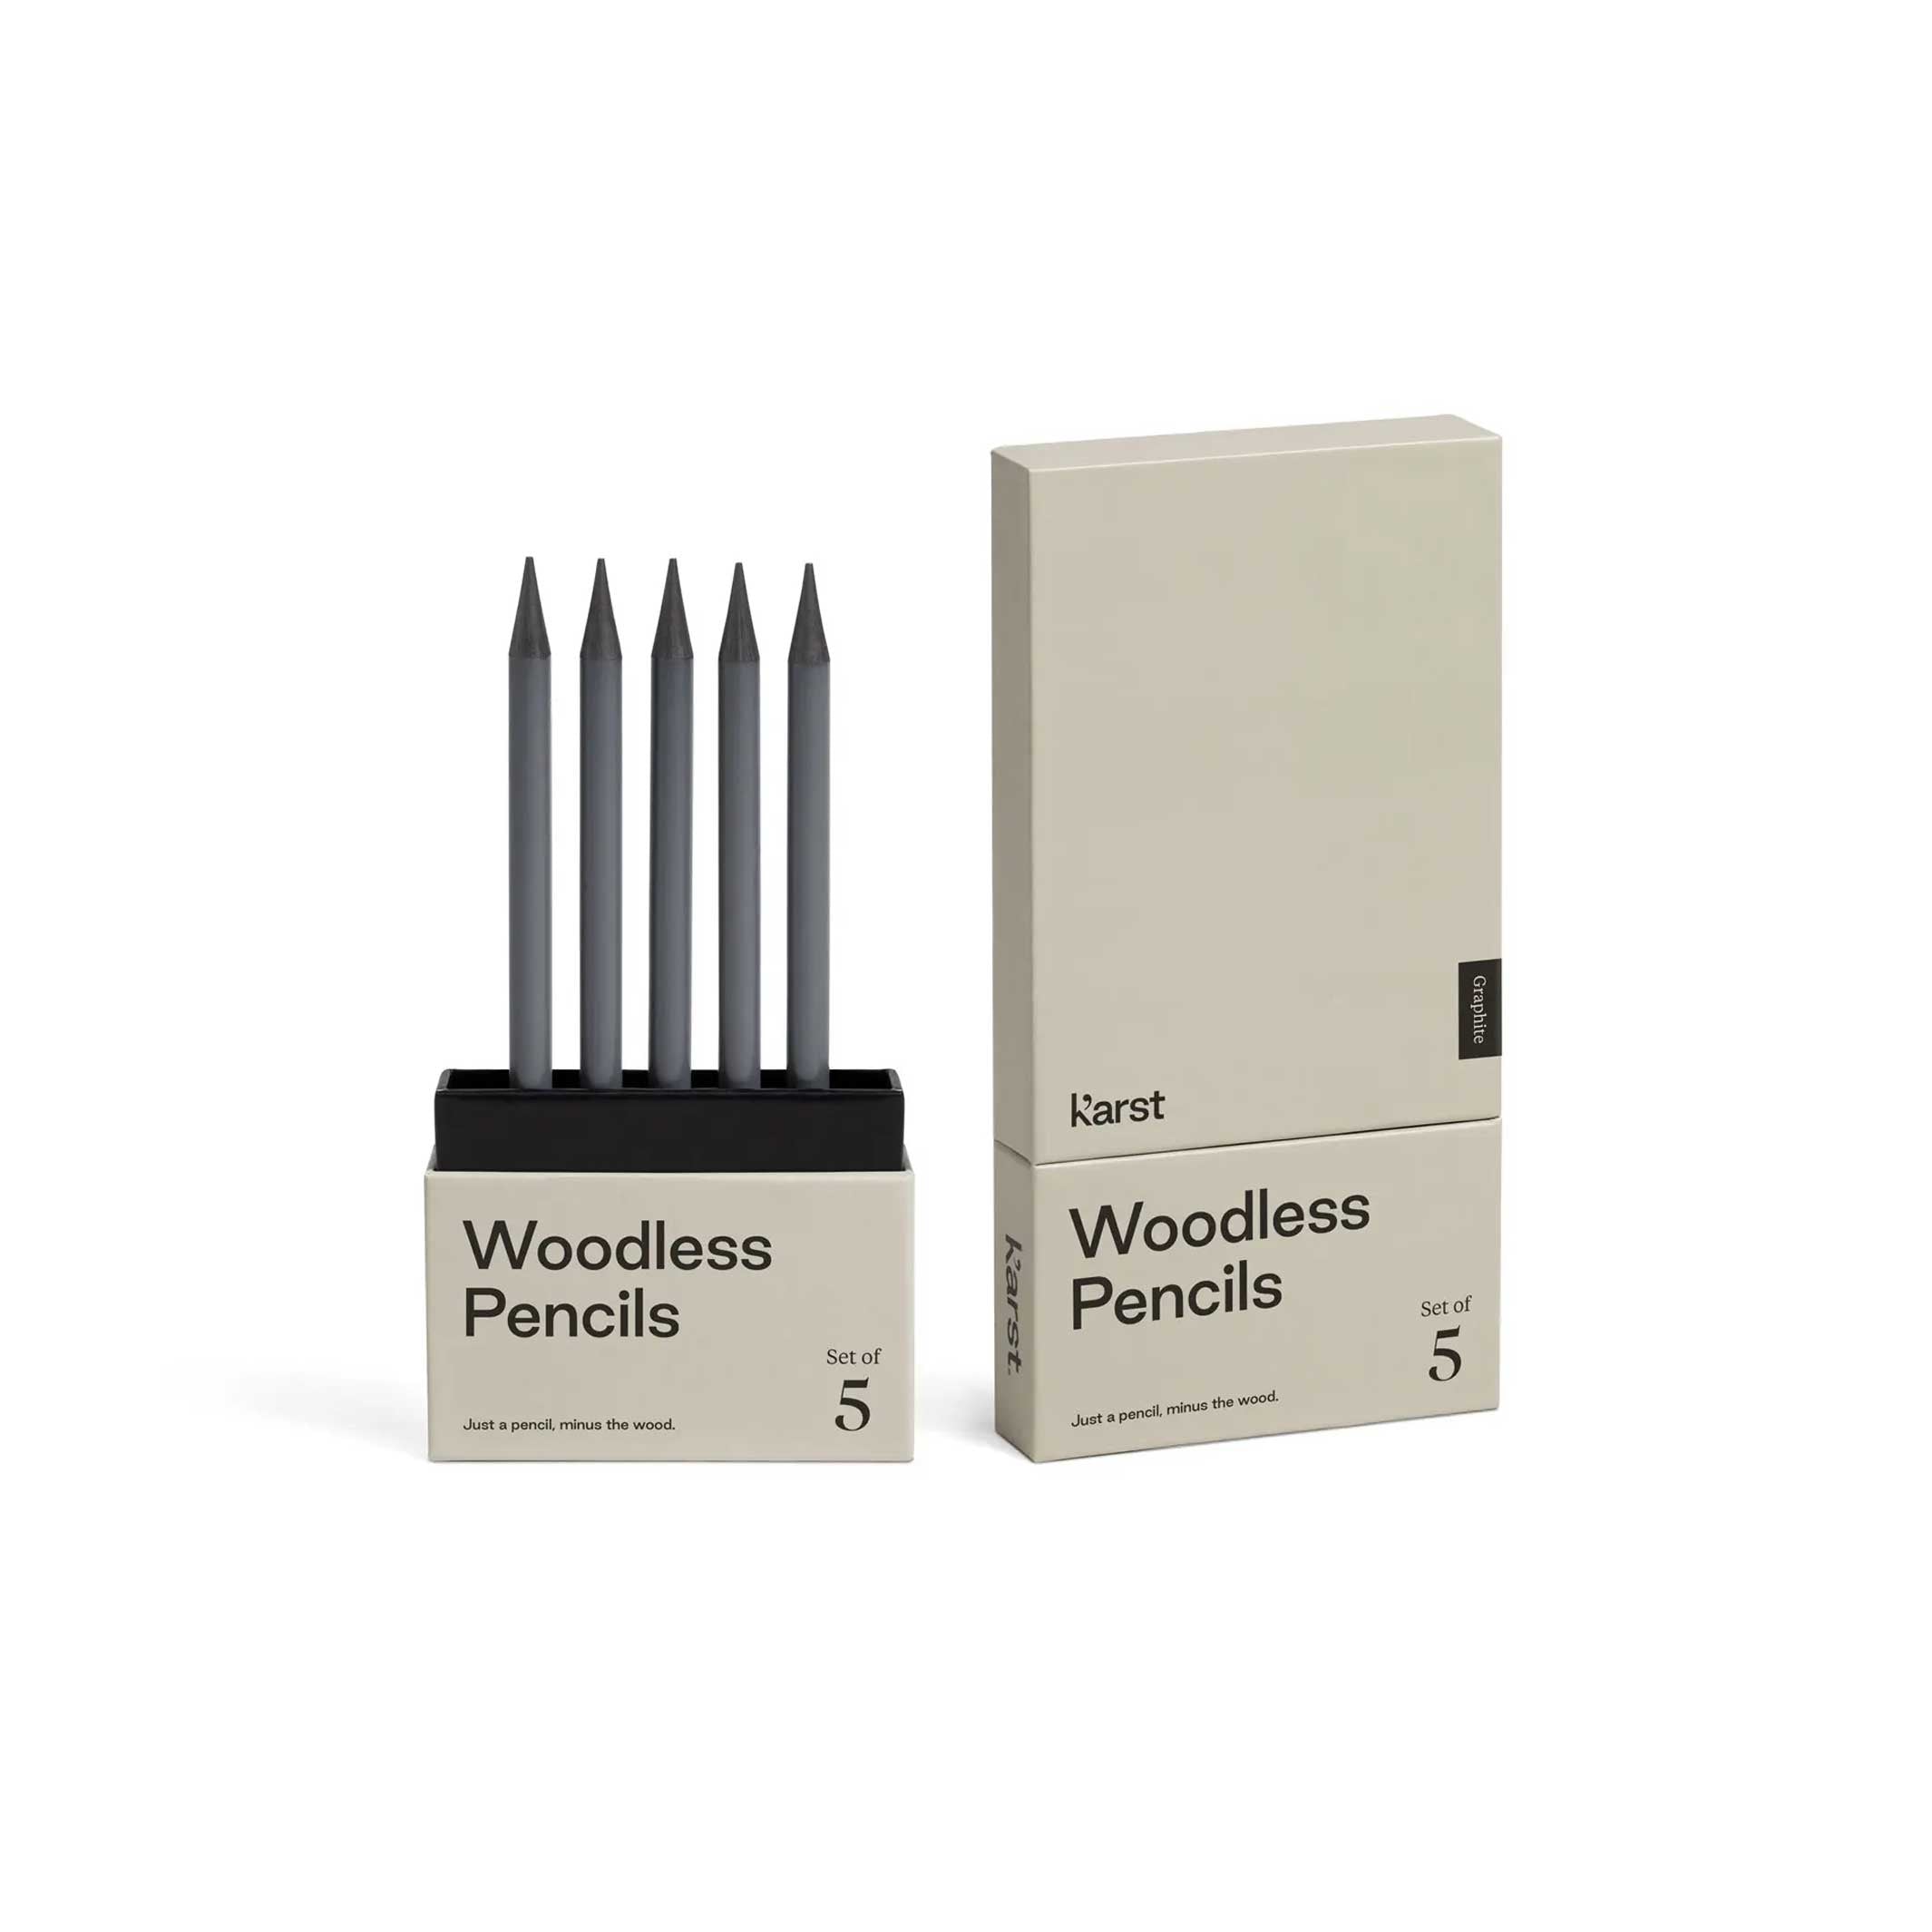 WOODLESS PENCILS | Set of 5 solid graphite PENCILS | 2B | Karst Stone Paper